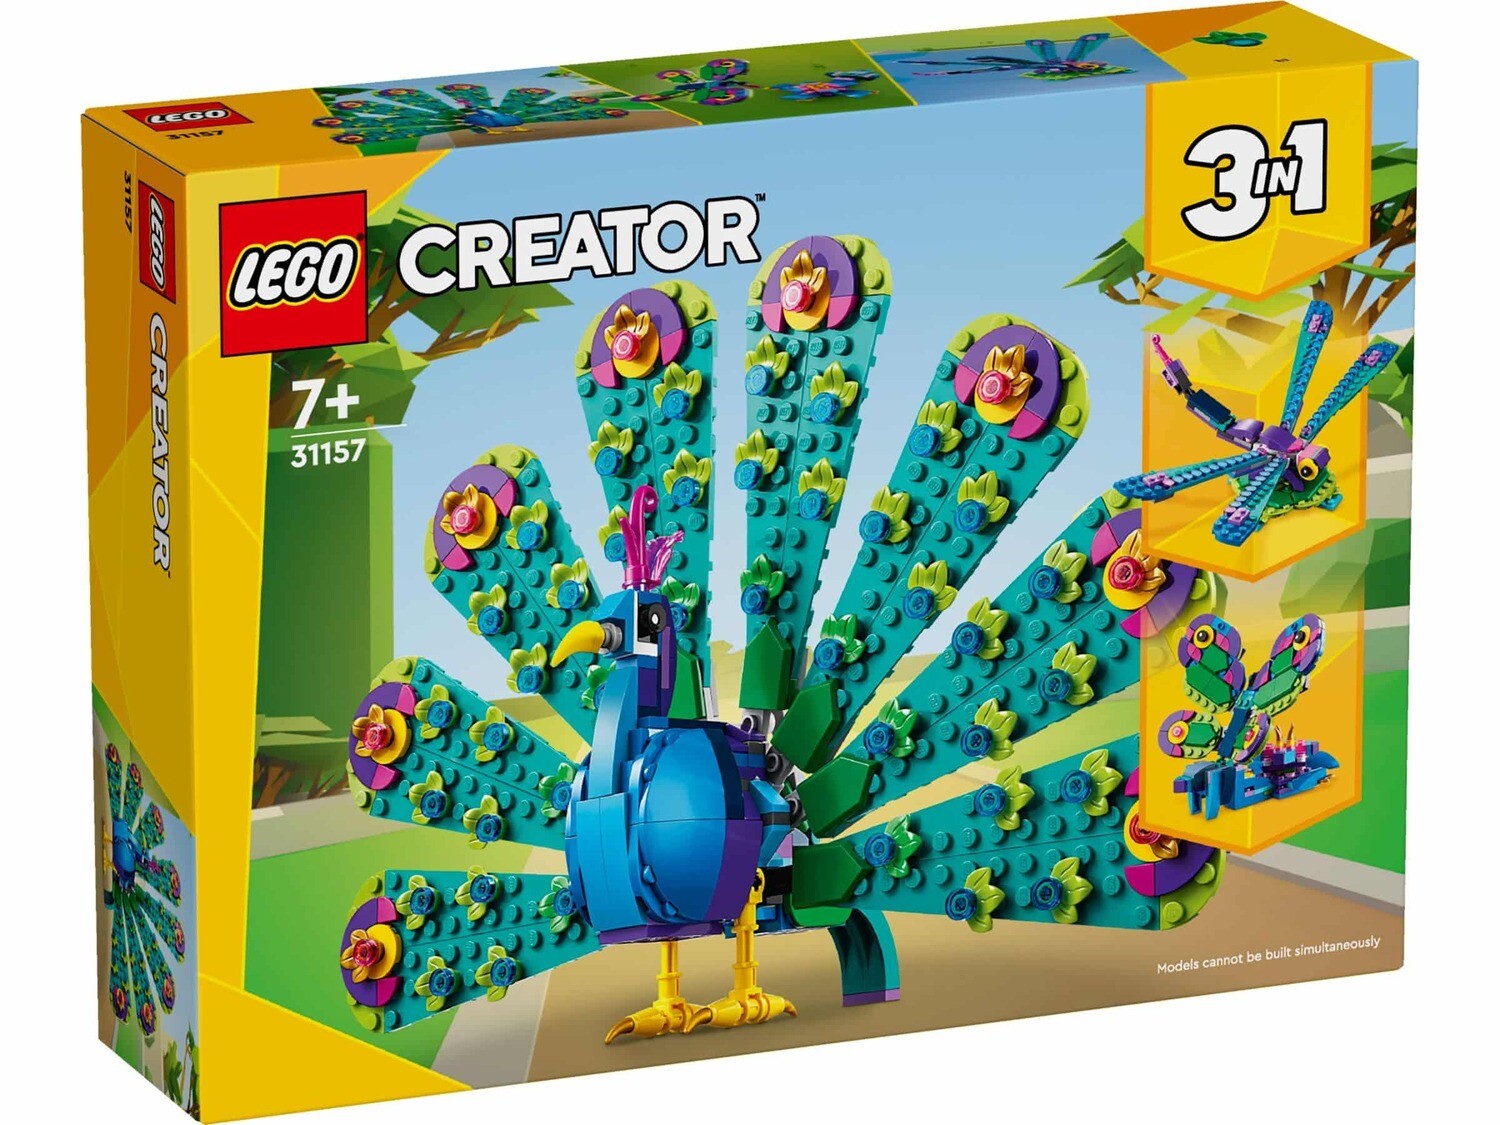 LEGO Creator 3-in-1 31157 - Exotische pauw